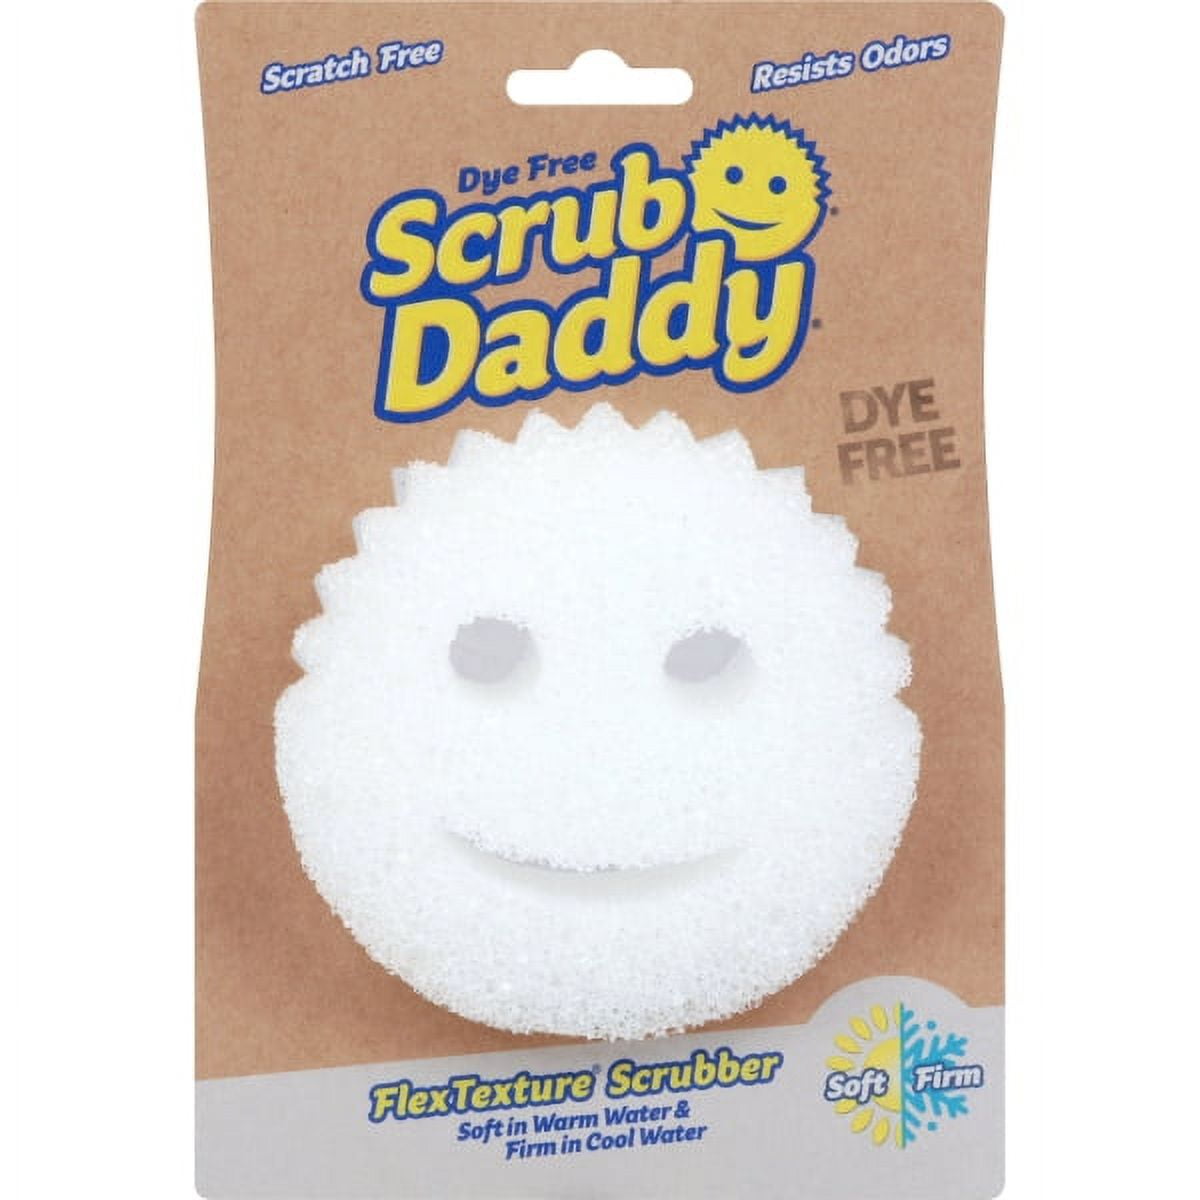  SCRUB DADDY Scrub Daddy FlexTexture Scrubber, 1 EA : Beauty &  Personal Care